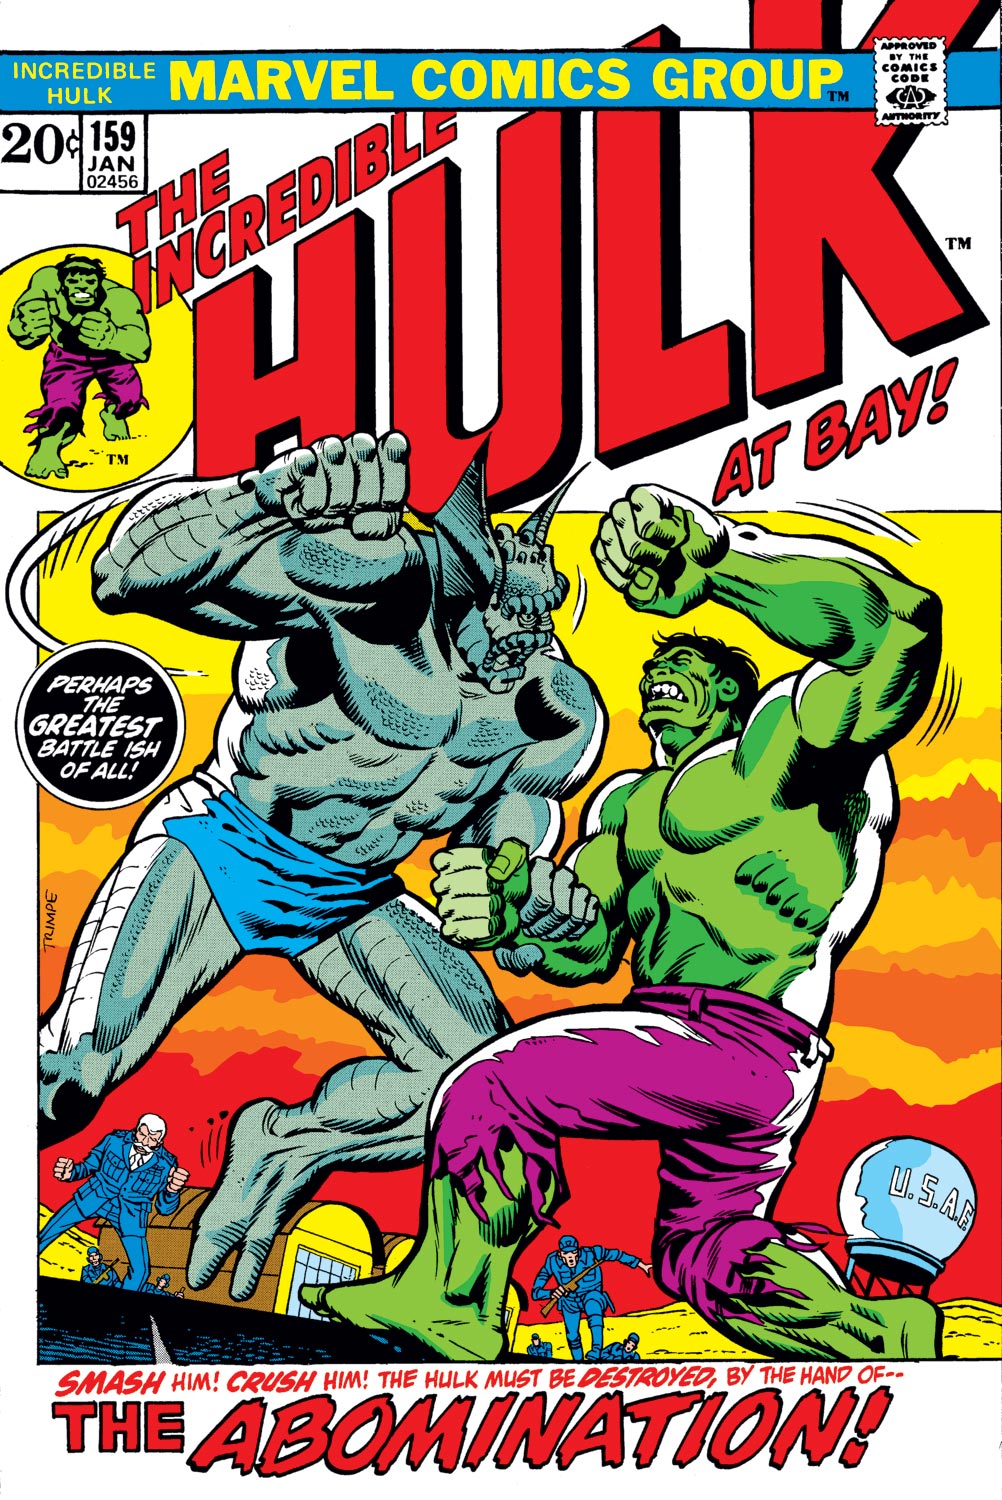 Incredible Hulk 1961 US Marvel Comic 174 175 185 186 187 188 189 190 